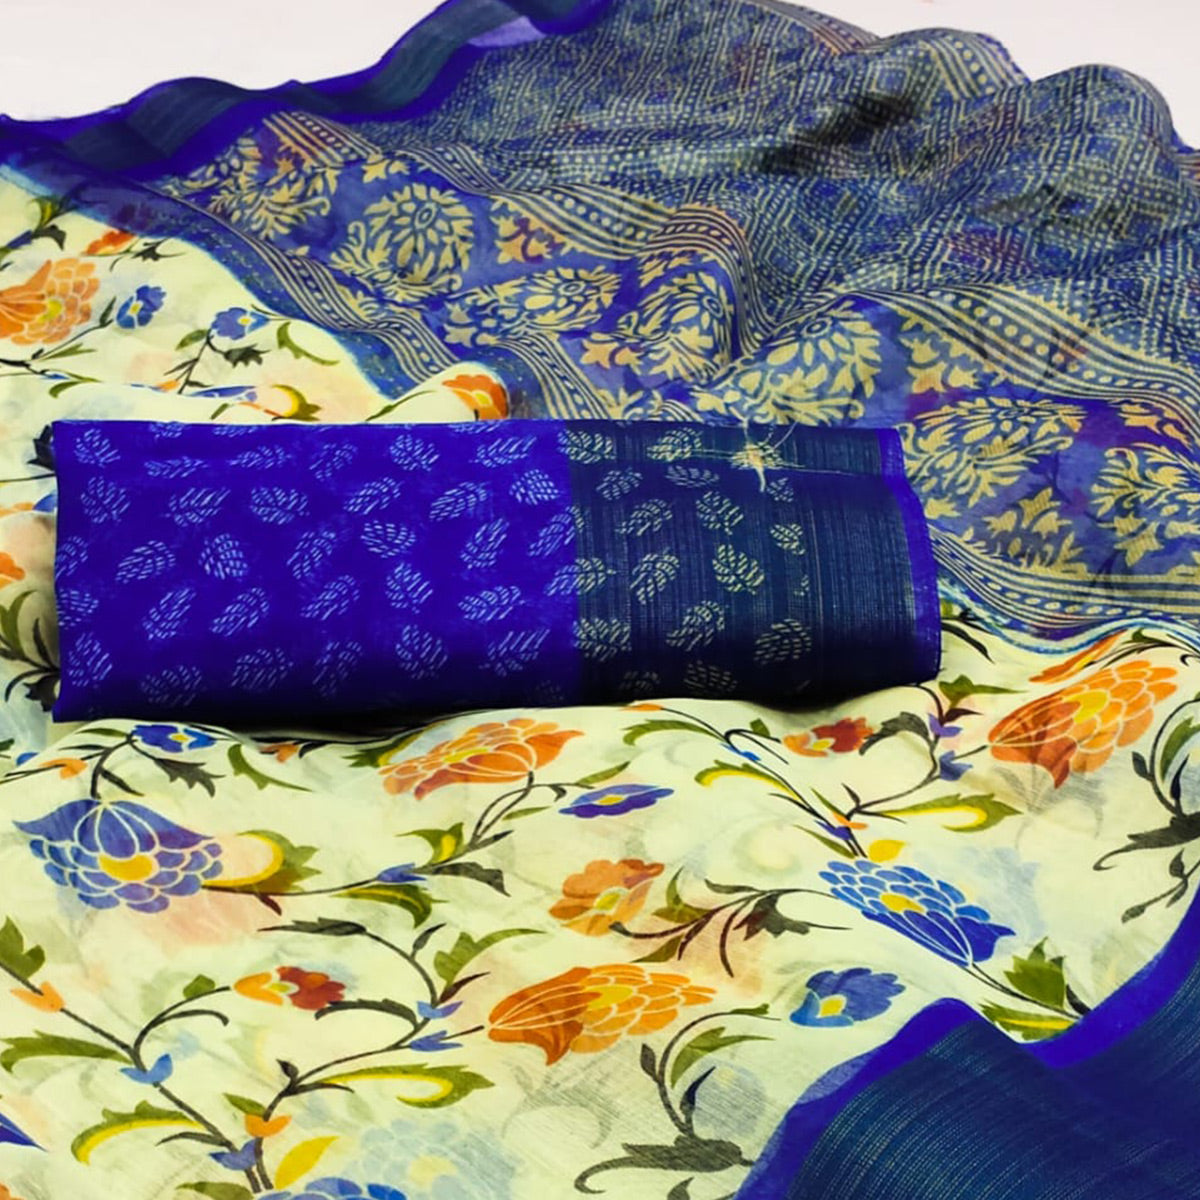 White & Royal Blue Floral Printed Cotton Blend Saree